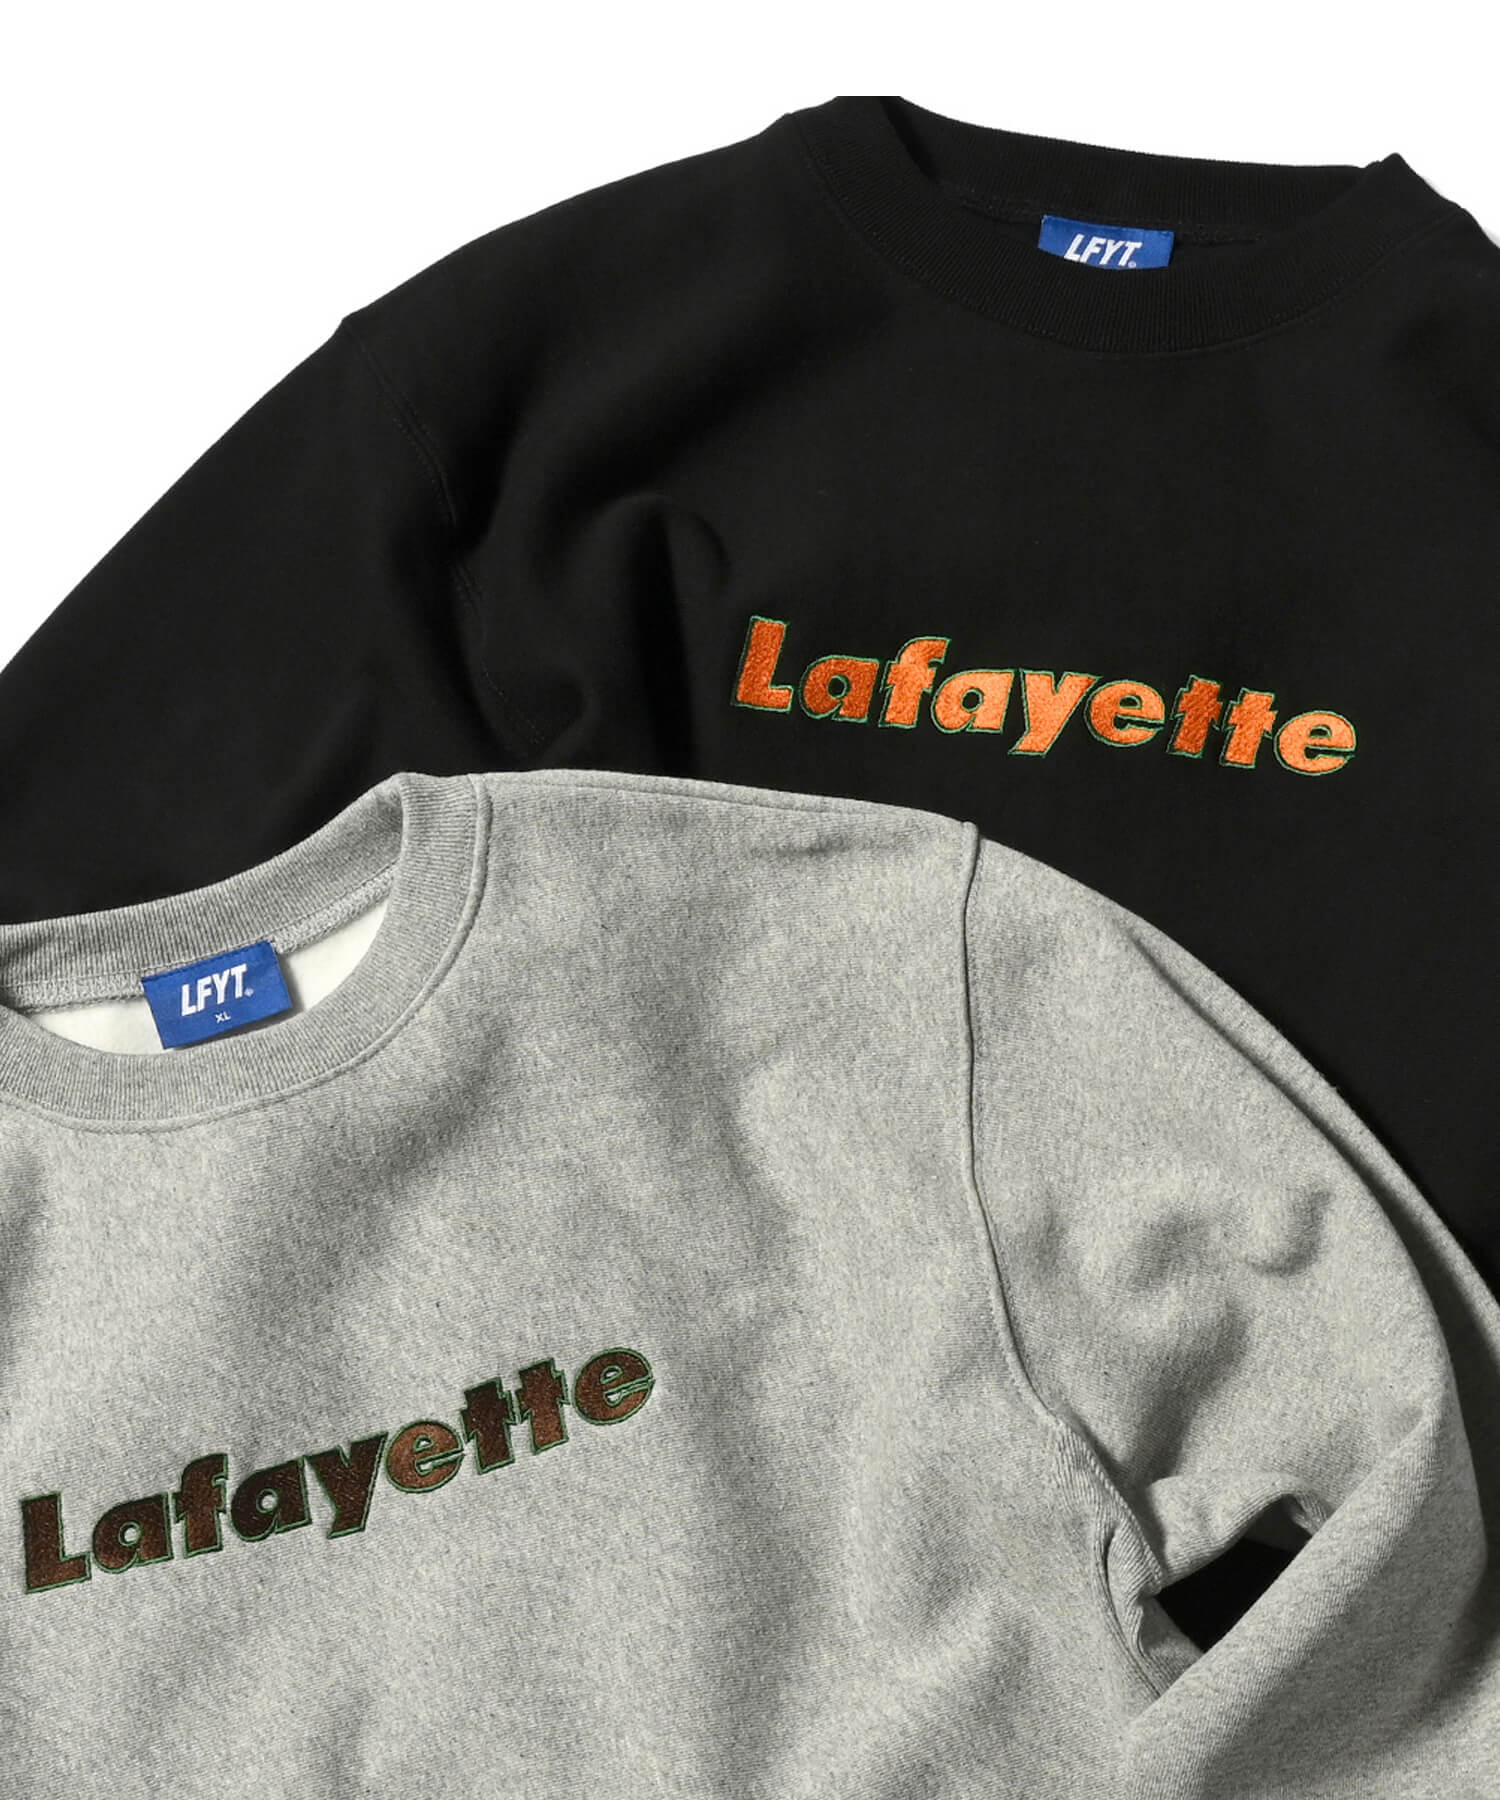 LFYT - Lafayette CORE LOGO CREWNECK SWEAT BEEF AND BROCCOLI LE230720